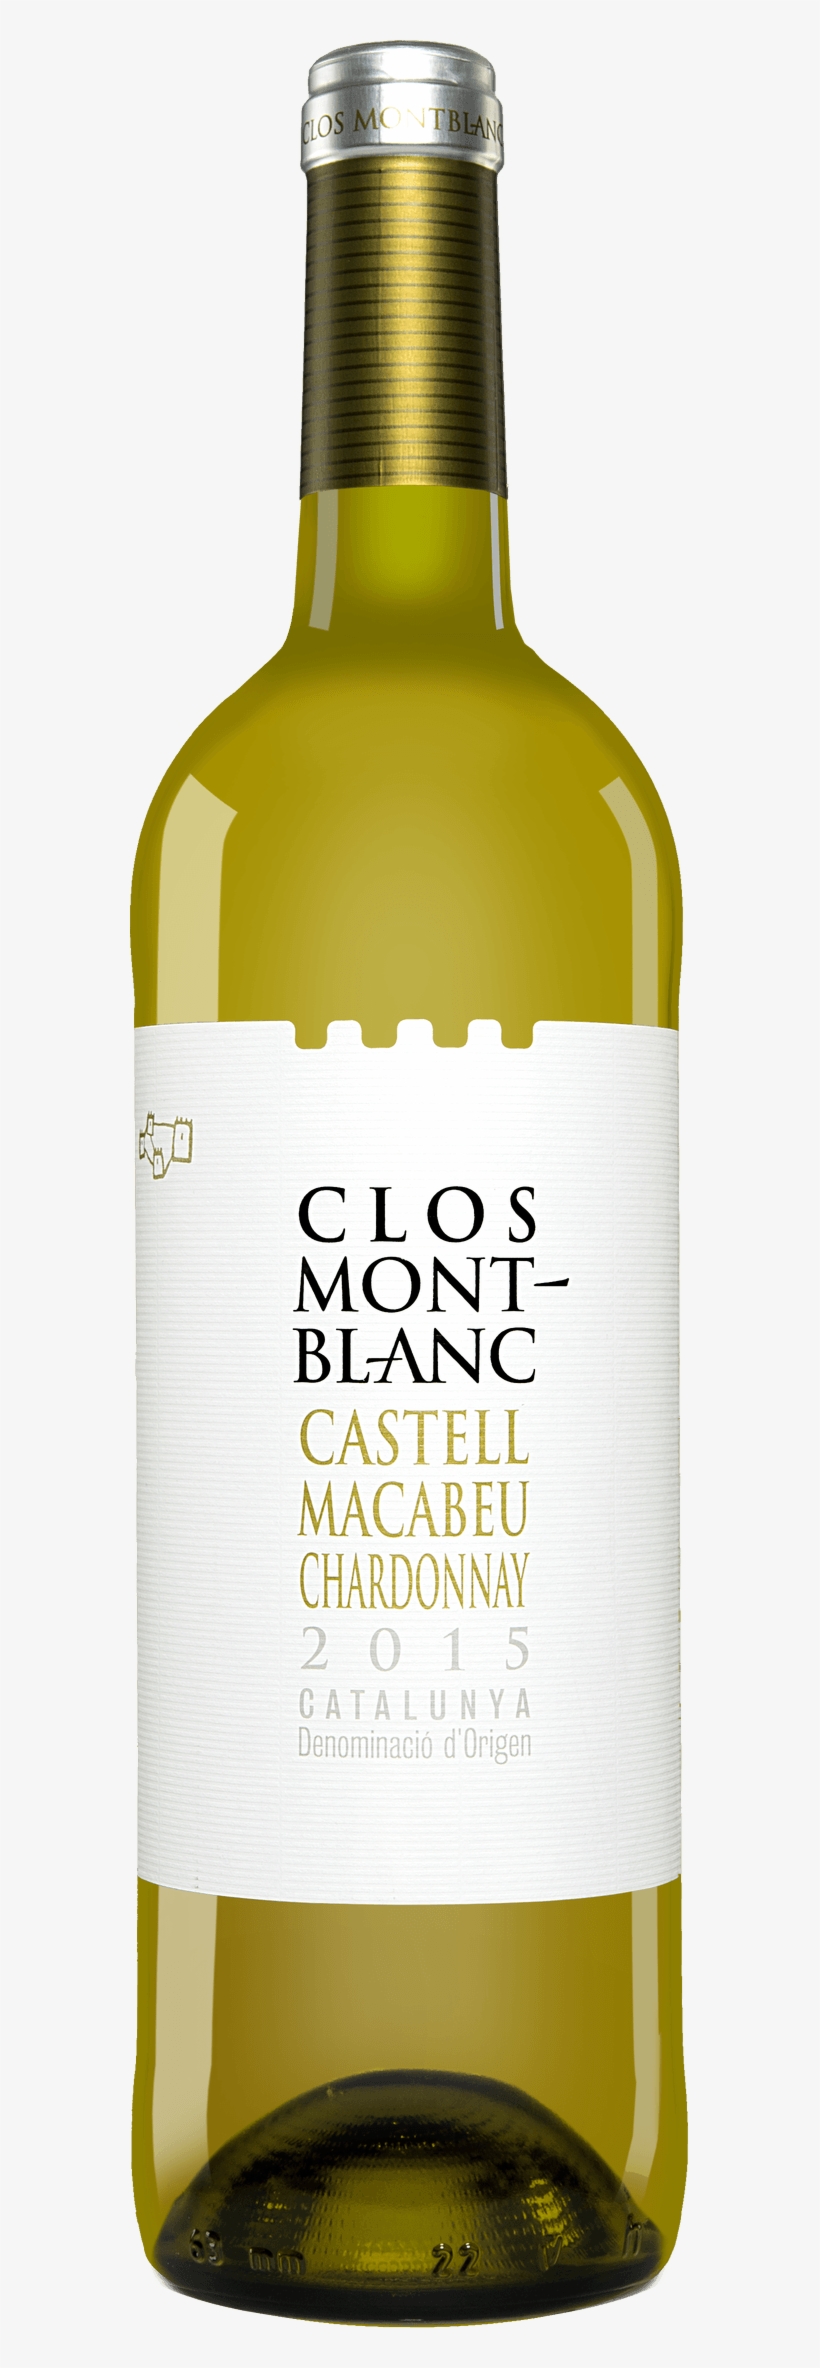 Clos Montblanc Castell Macabeu Chardonnay - Clos Montblanc Castell, transparent png #5320626